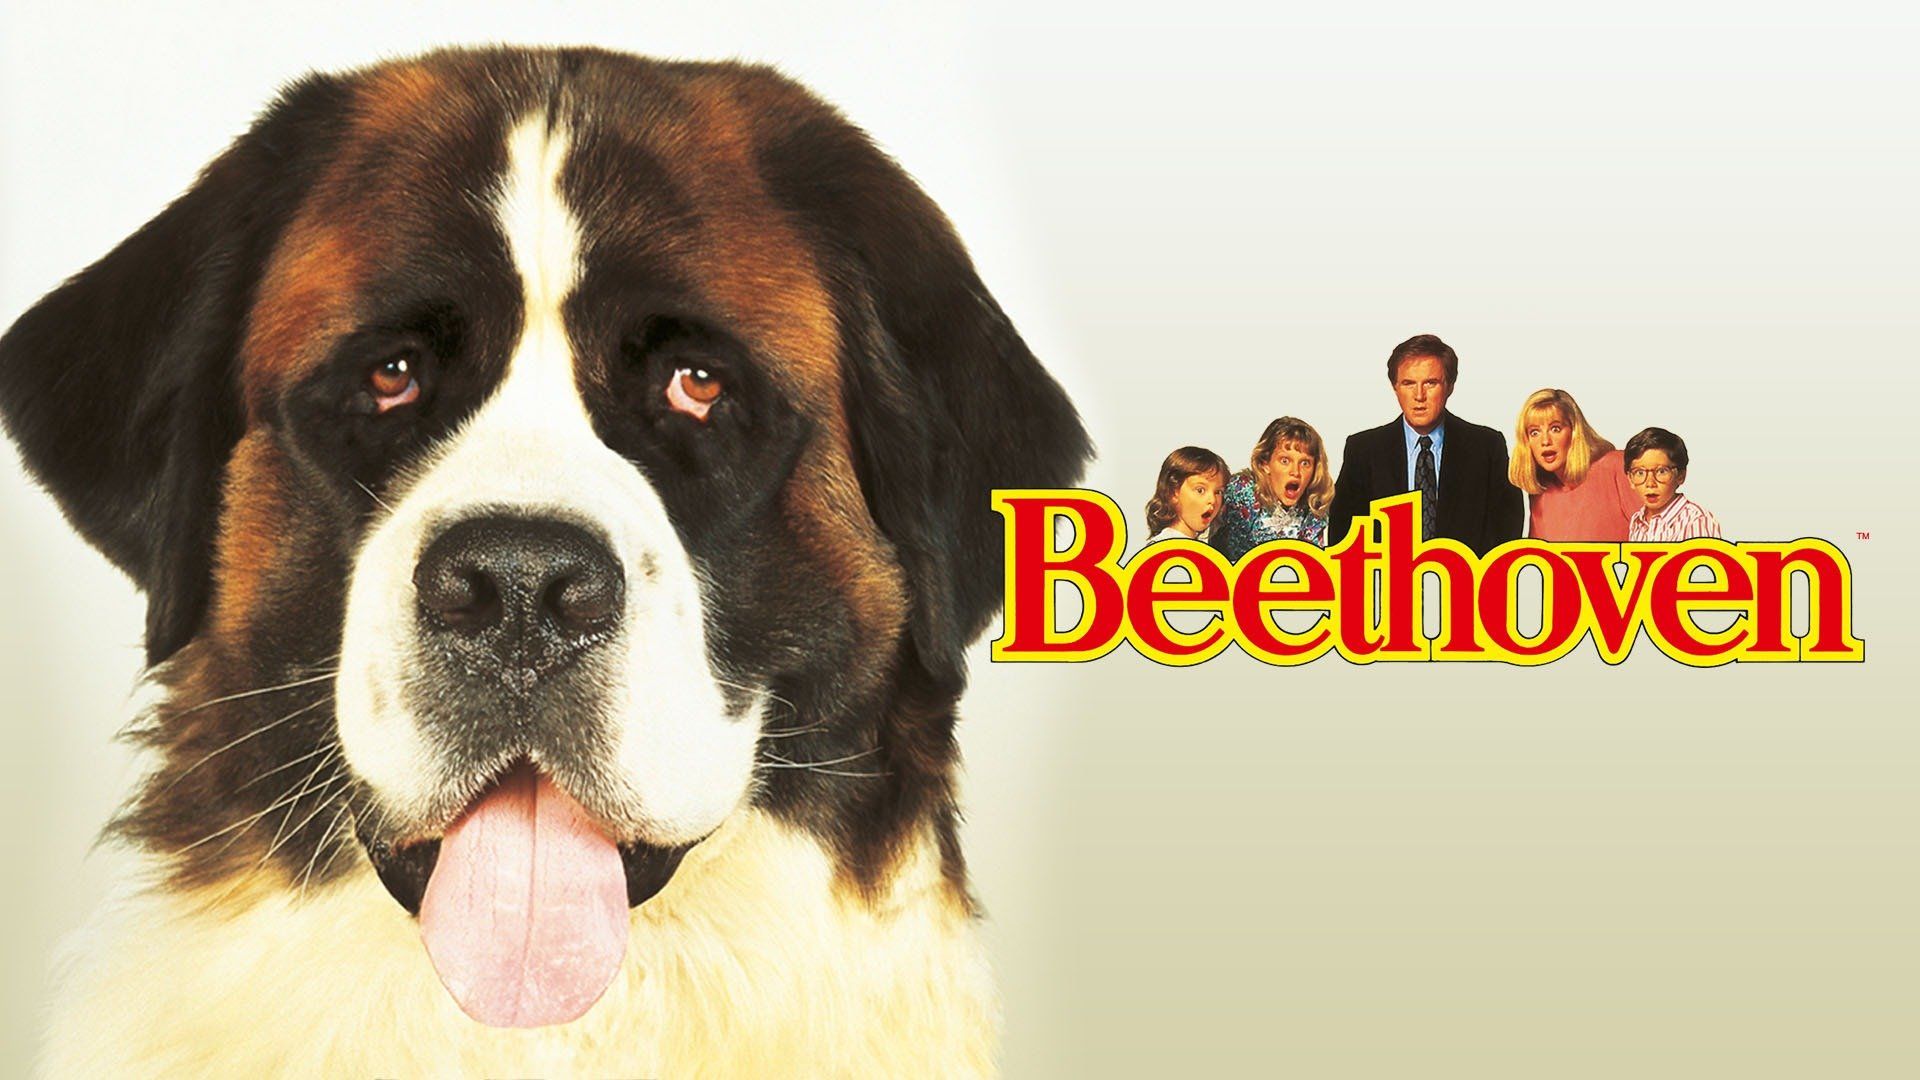 Watch Beethoven (1992) Full Movie Online - Plex